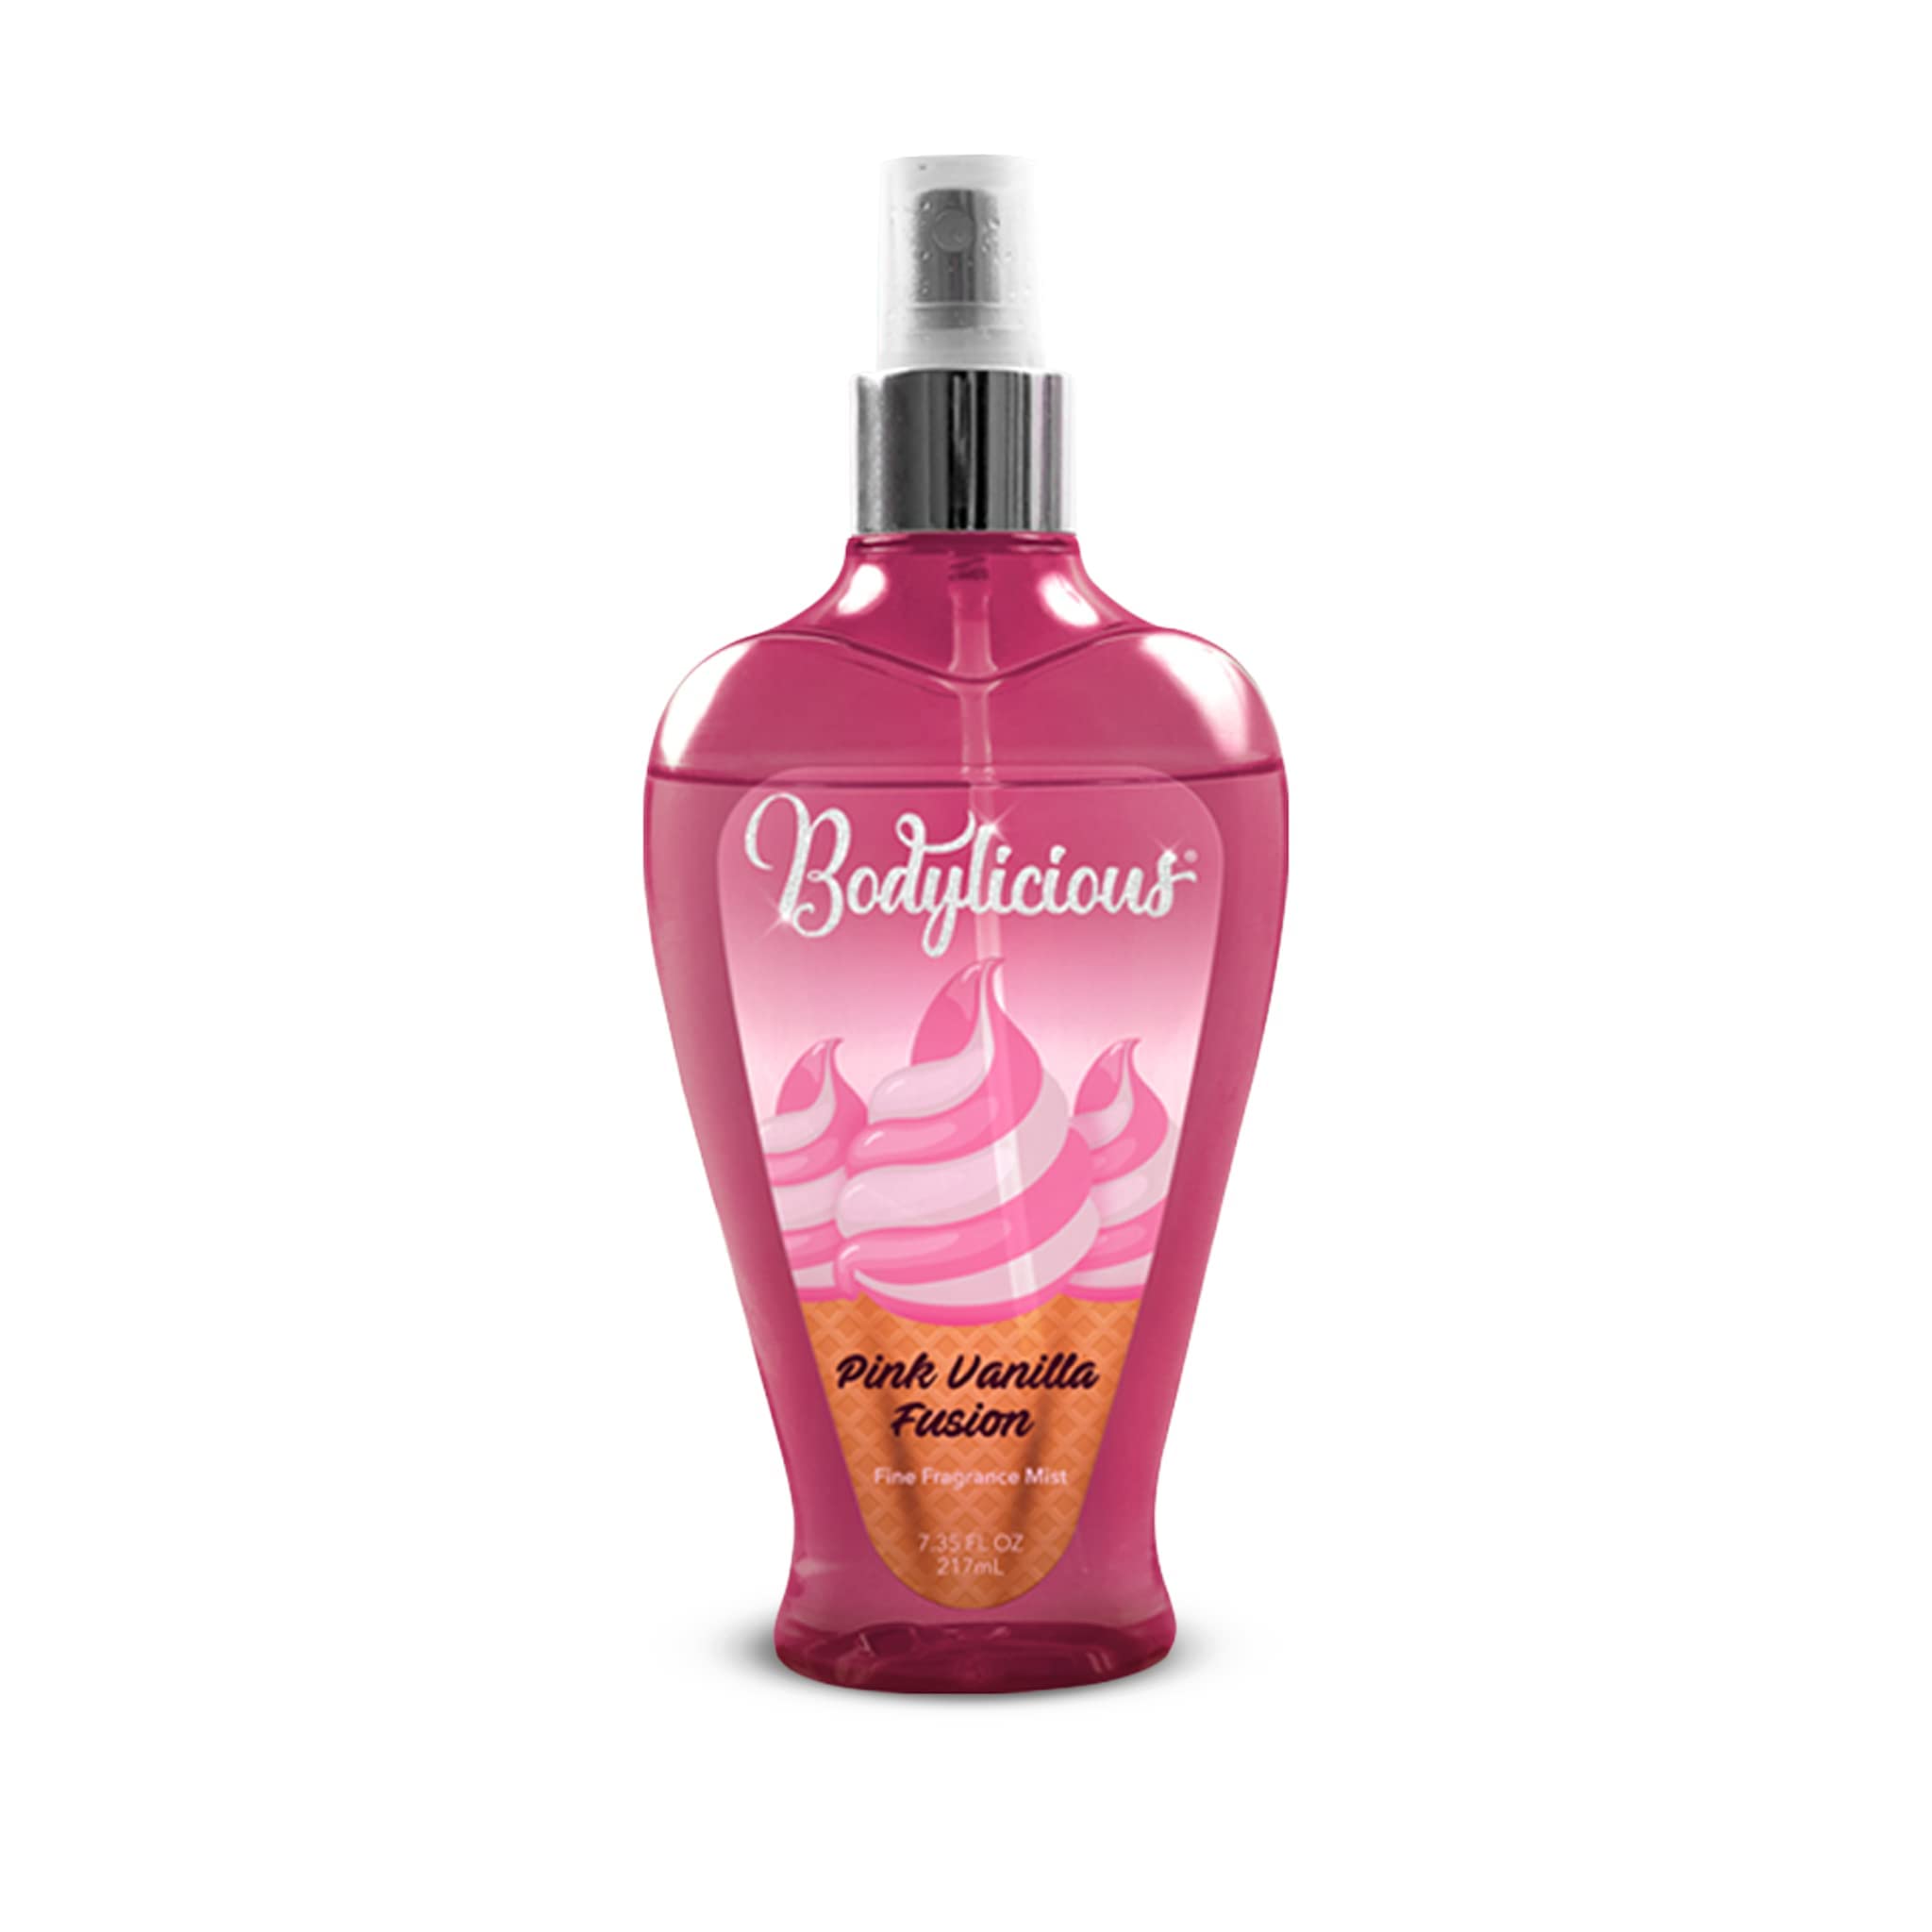 Pink Vanilla Fusion Body Spray 217ml